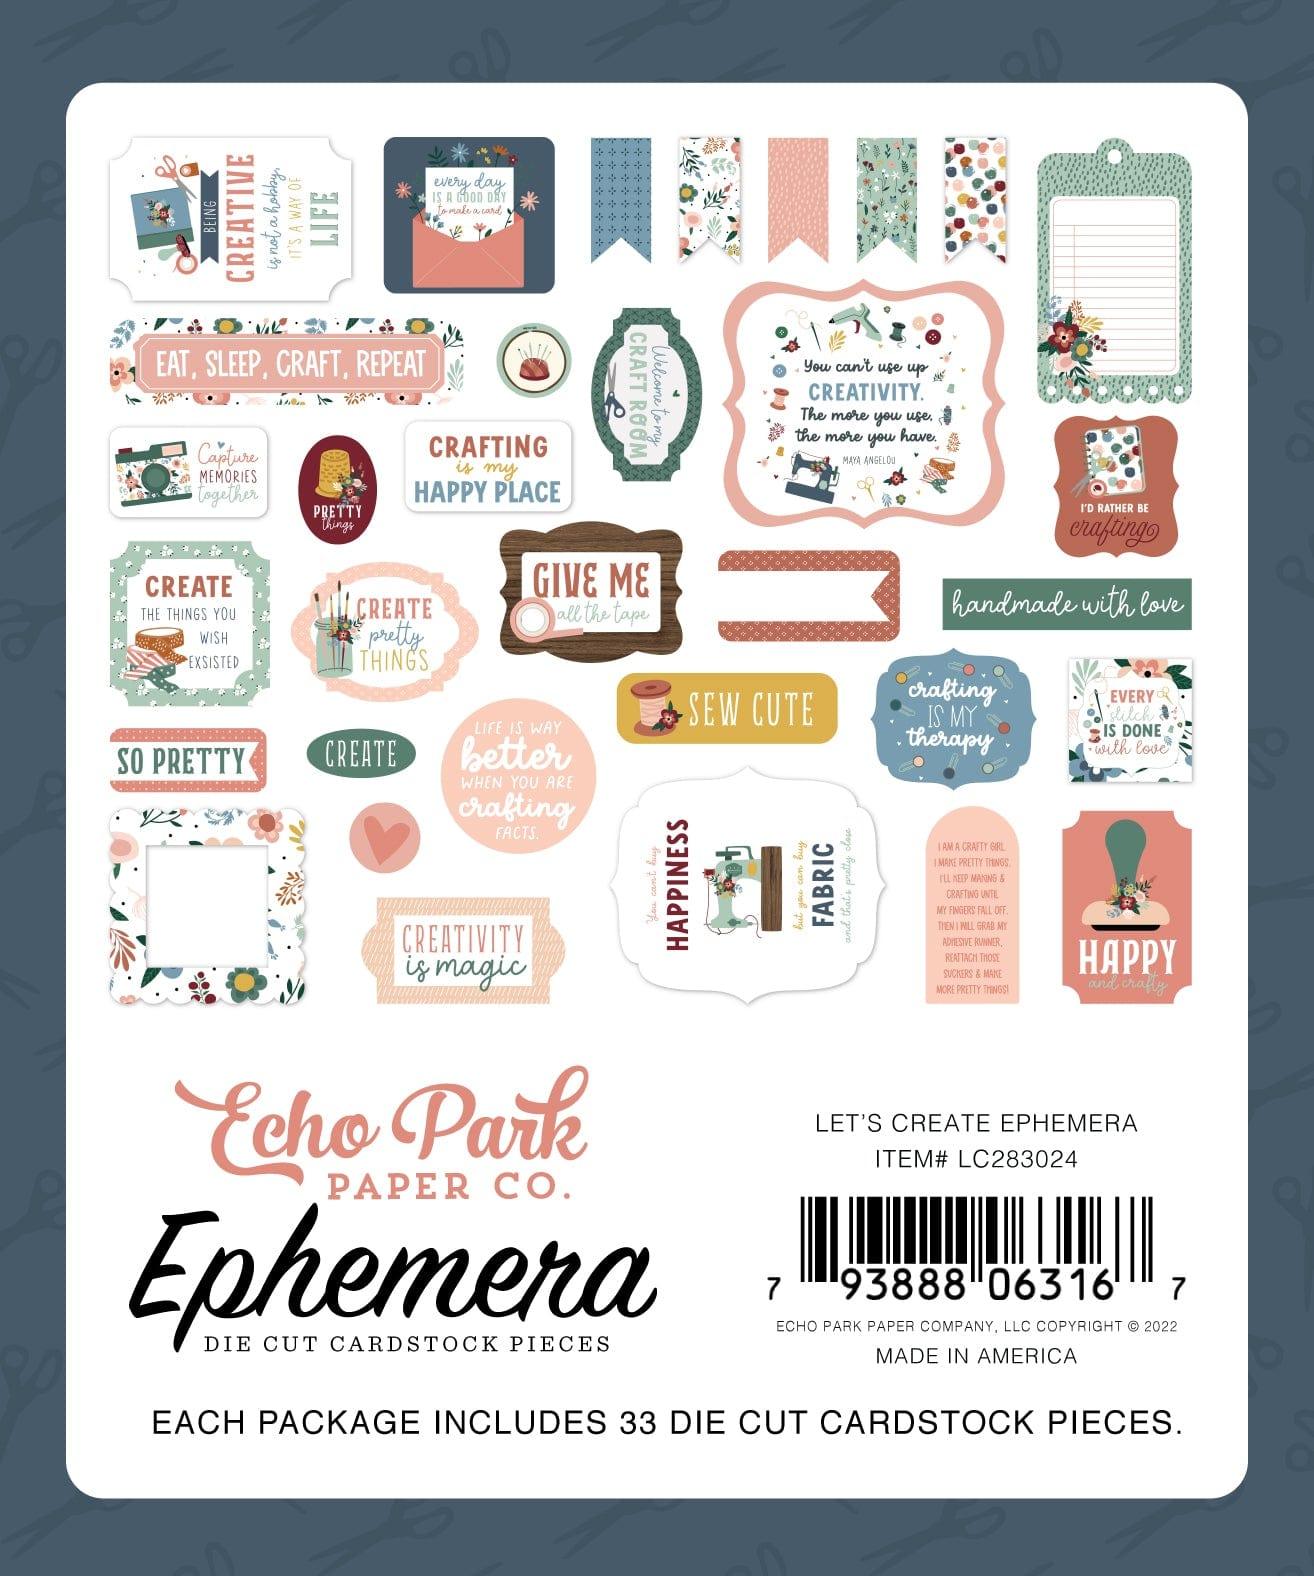 Let's Create Collection 5 x 5 Scrapbook Ephemera Die Cuts by Echo Park Paper - Scrapbook Supply Companies